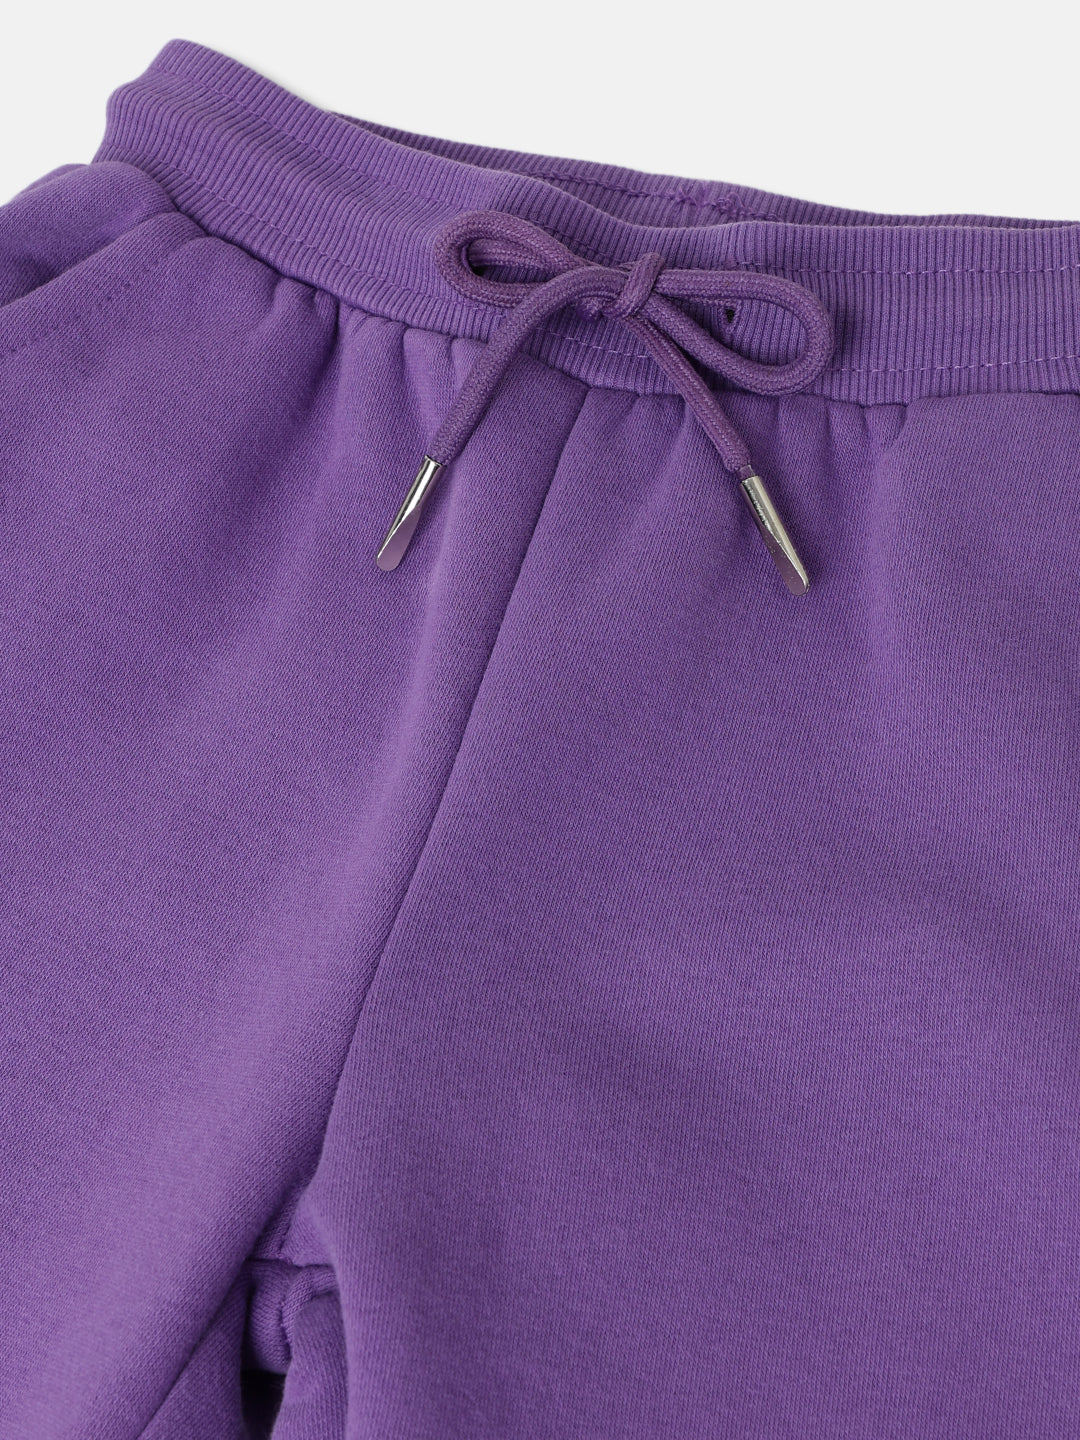 Elle Kids Girls Purple Colour blocked Regular Fit Sweatpant